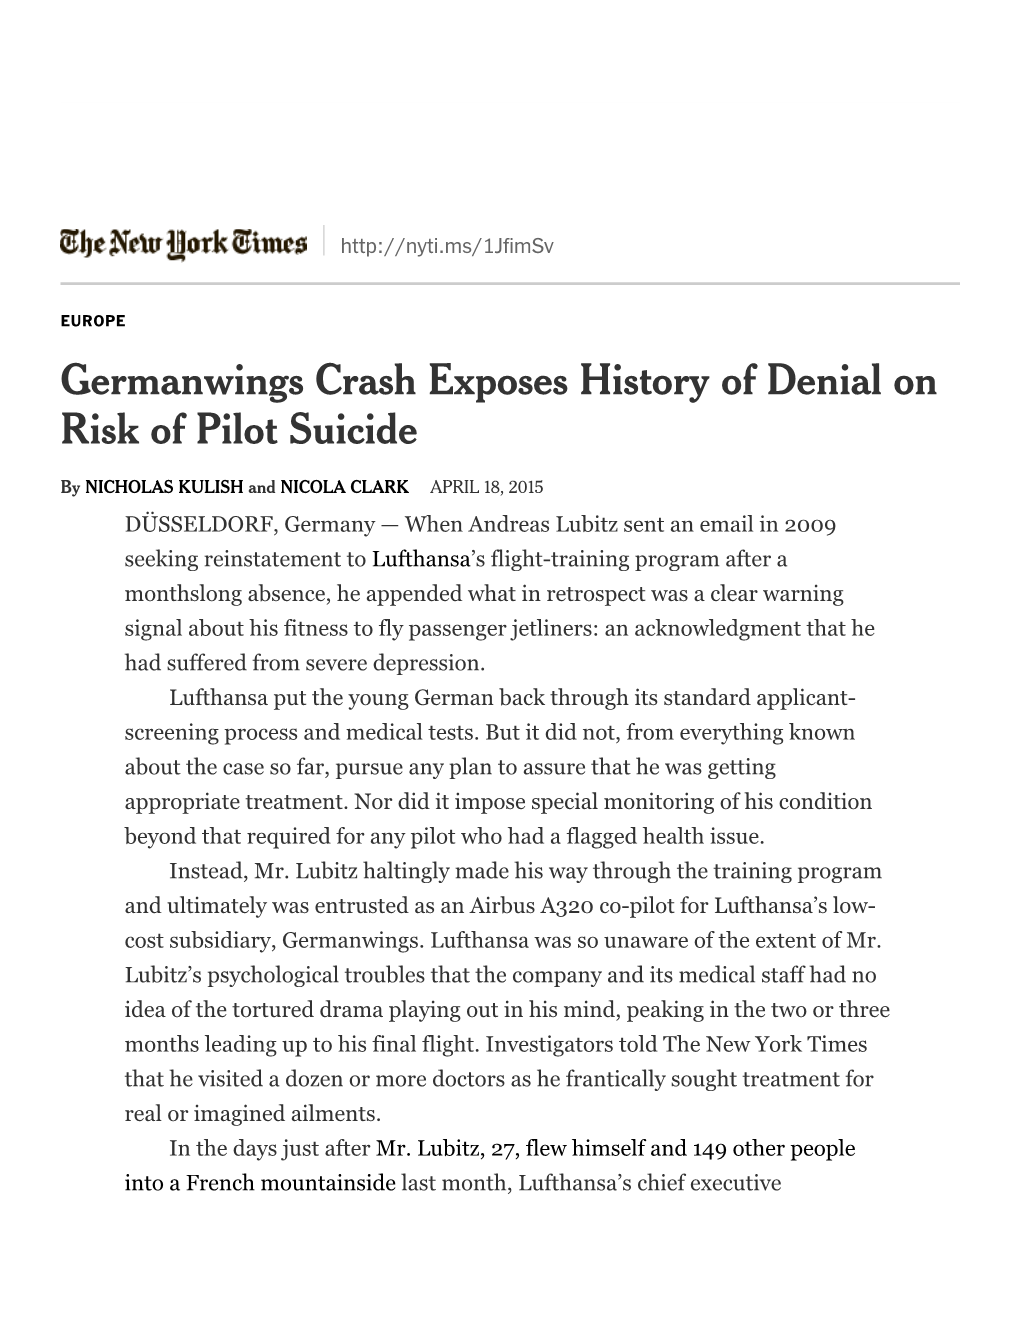 Germanwings Crash Expose...T Suicide